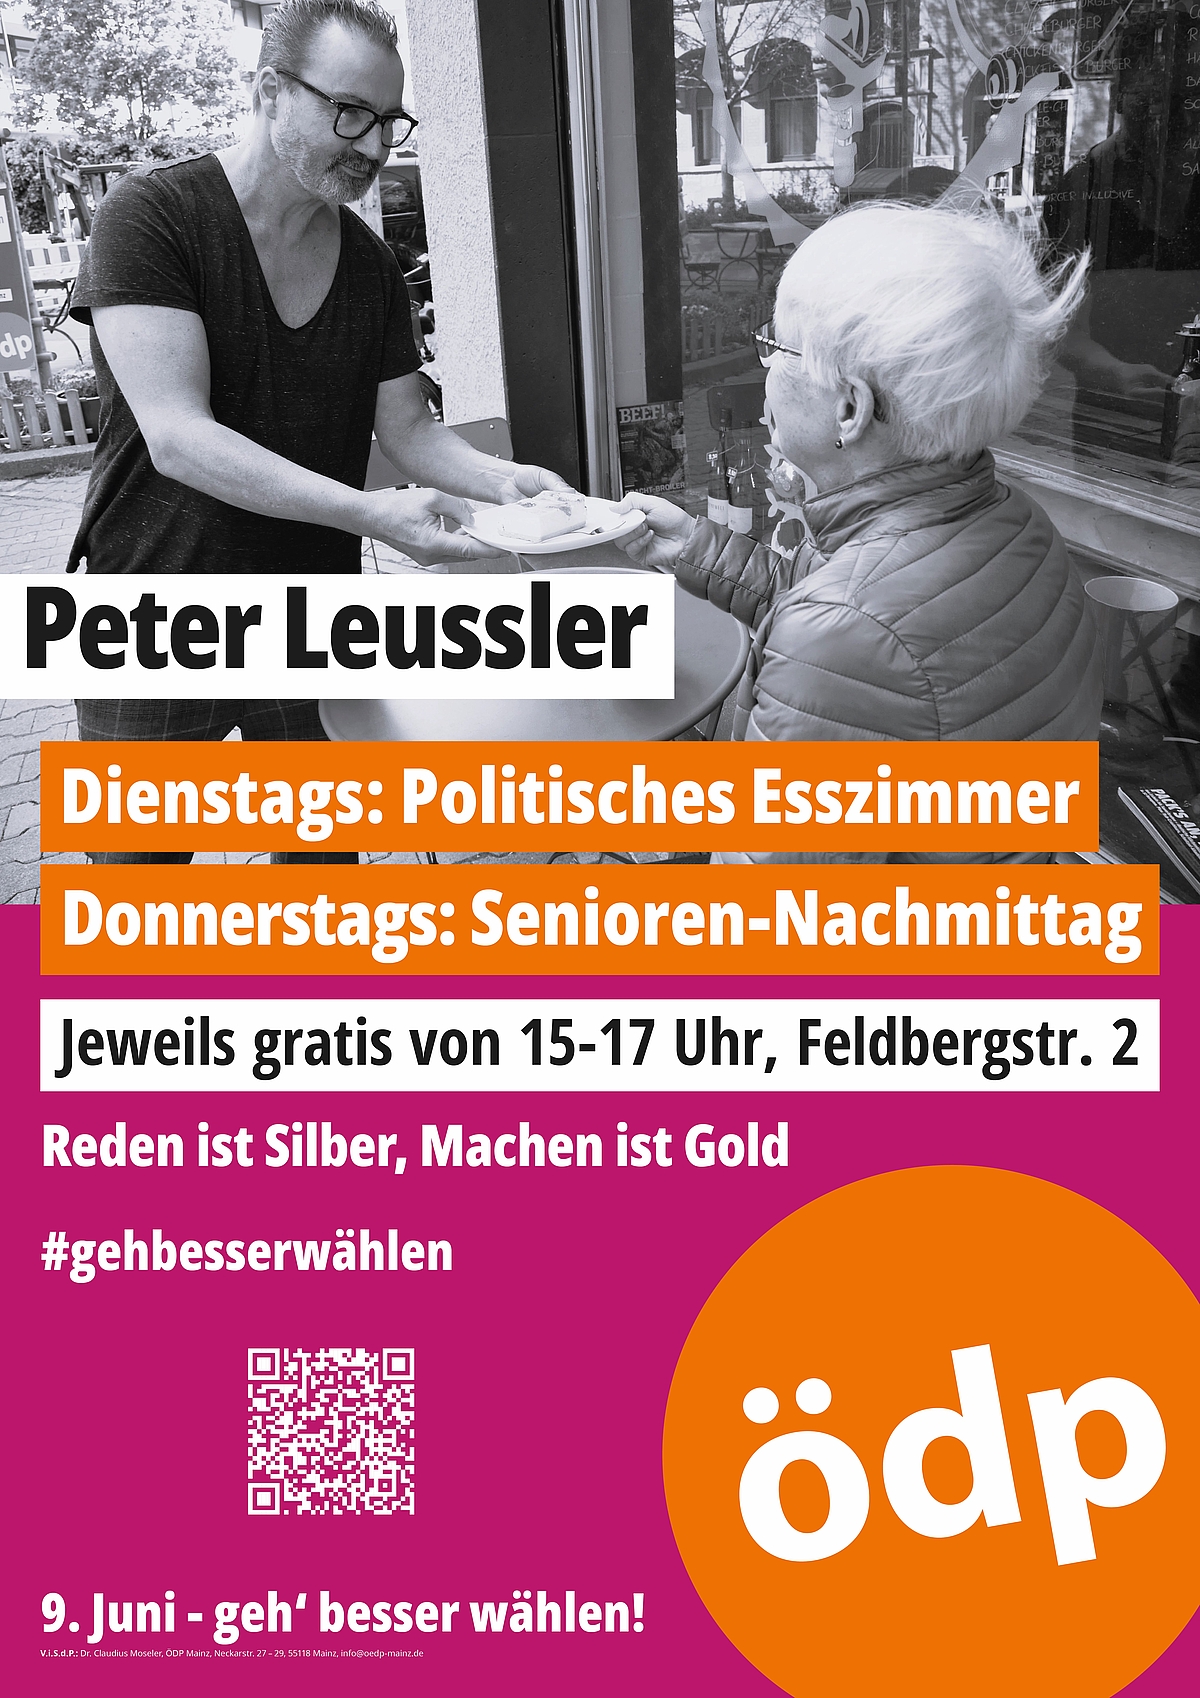 Wahlplakat Peter Leussler in Aktion